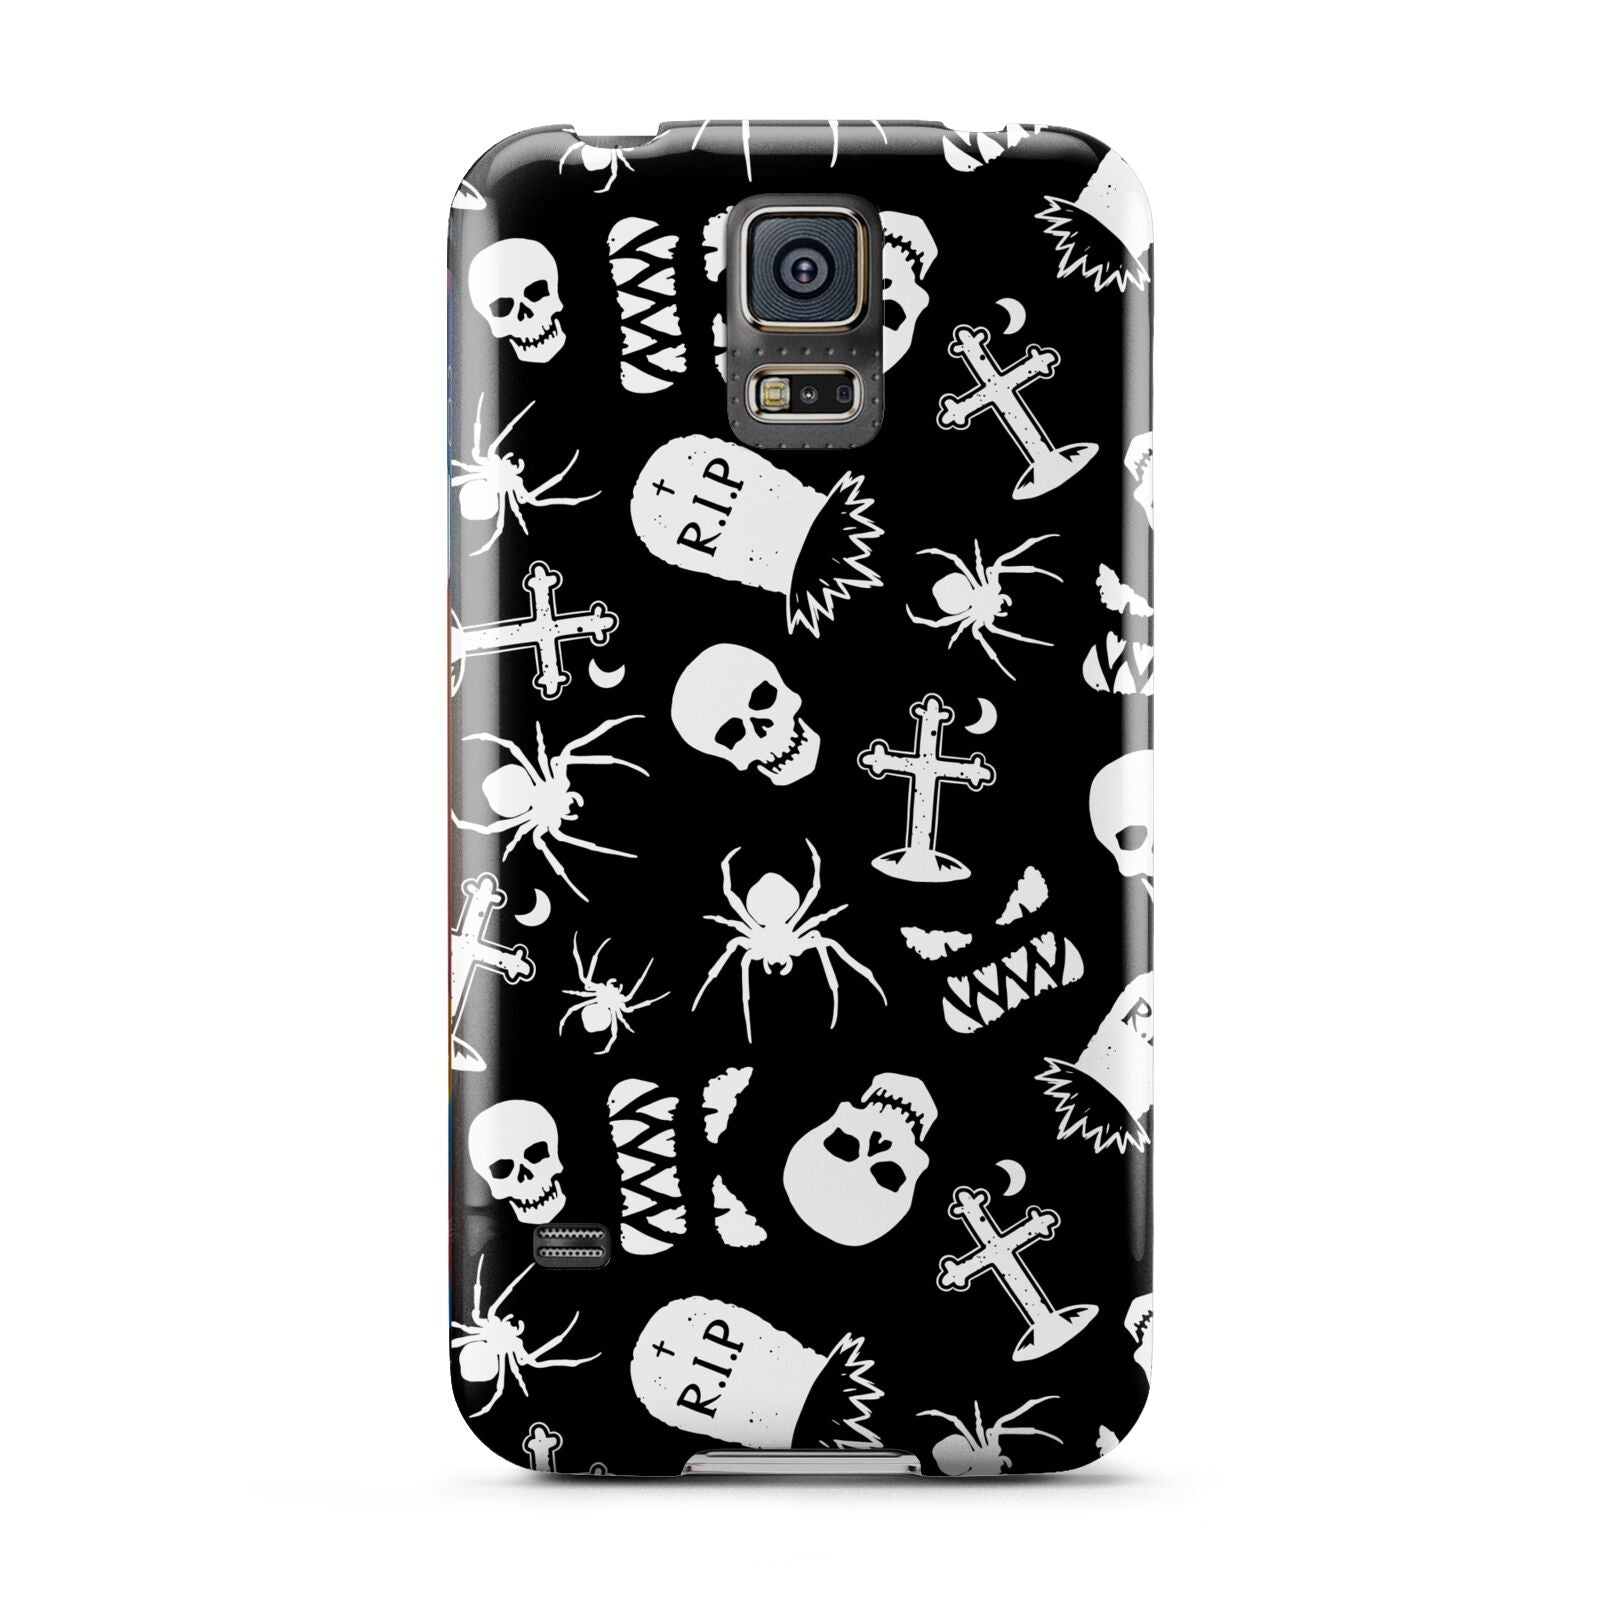 Spooky Illustrations Samsung Galaxy S5 Case